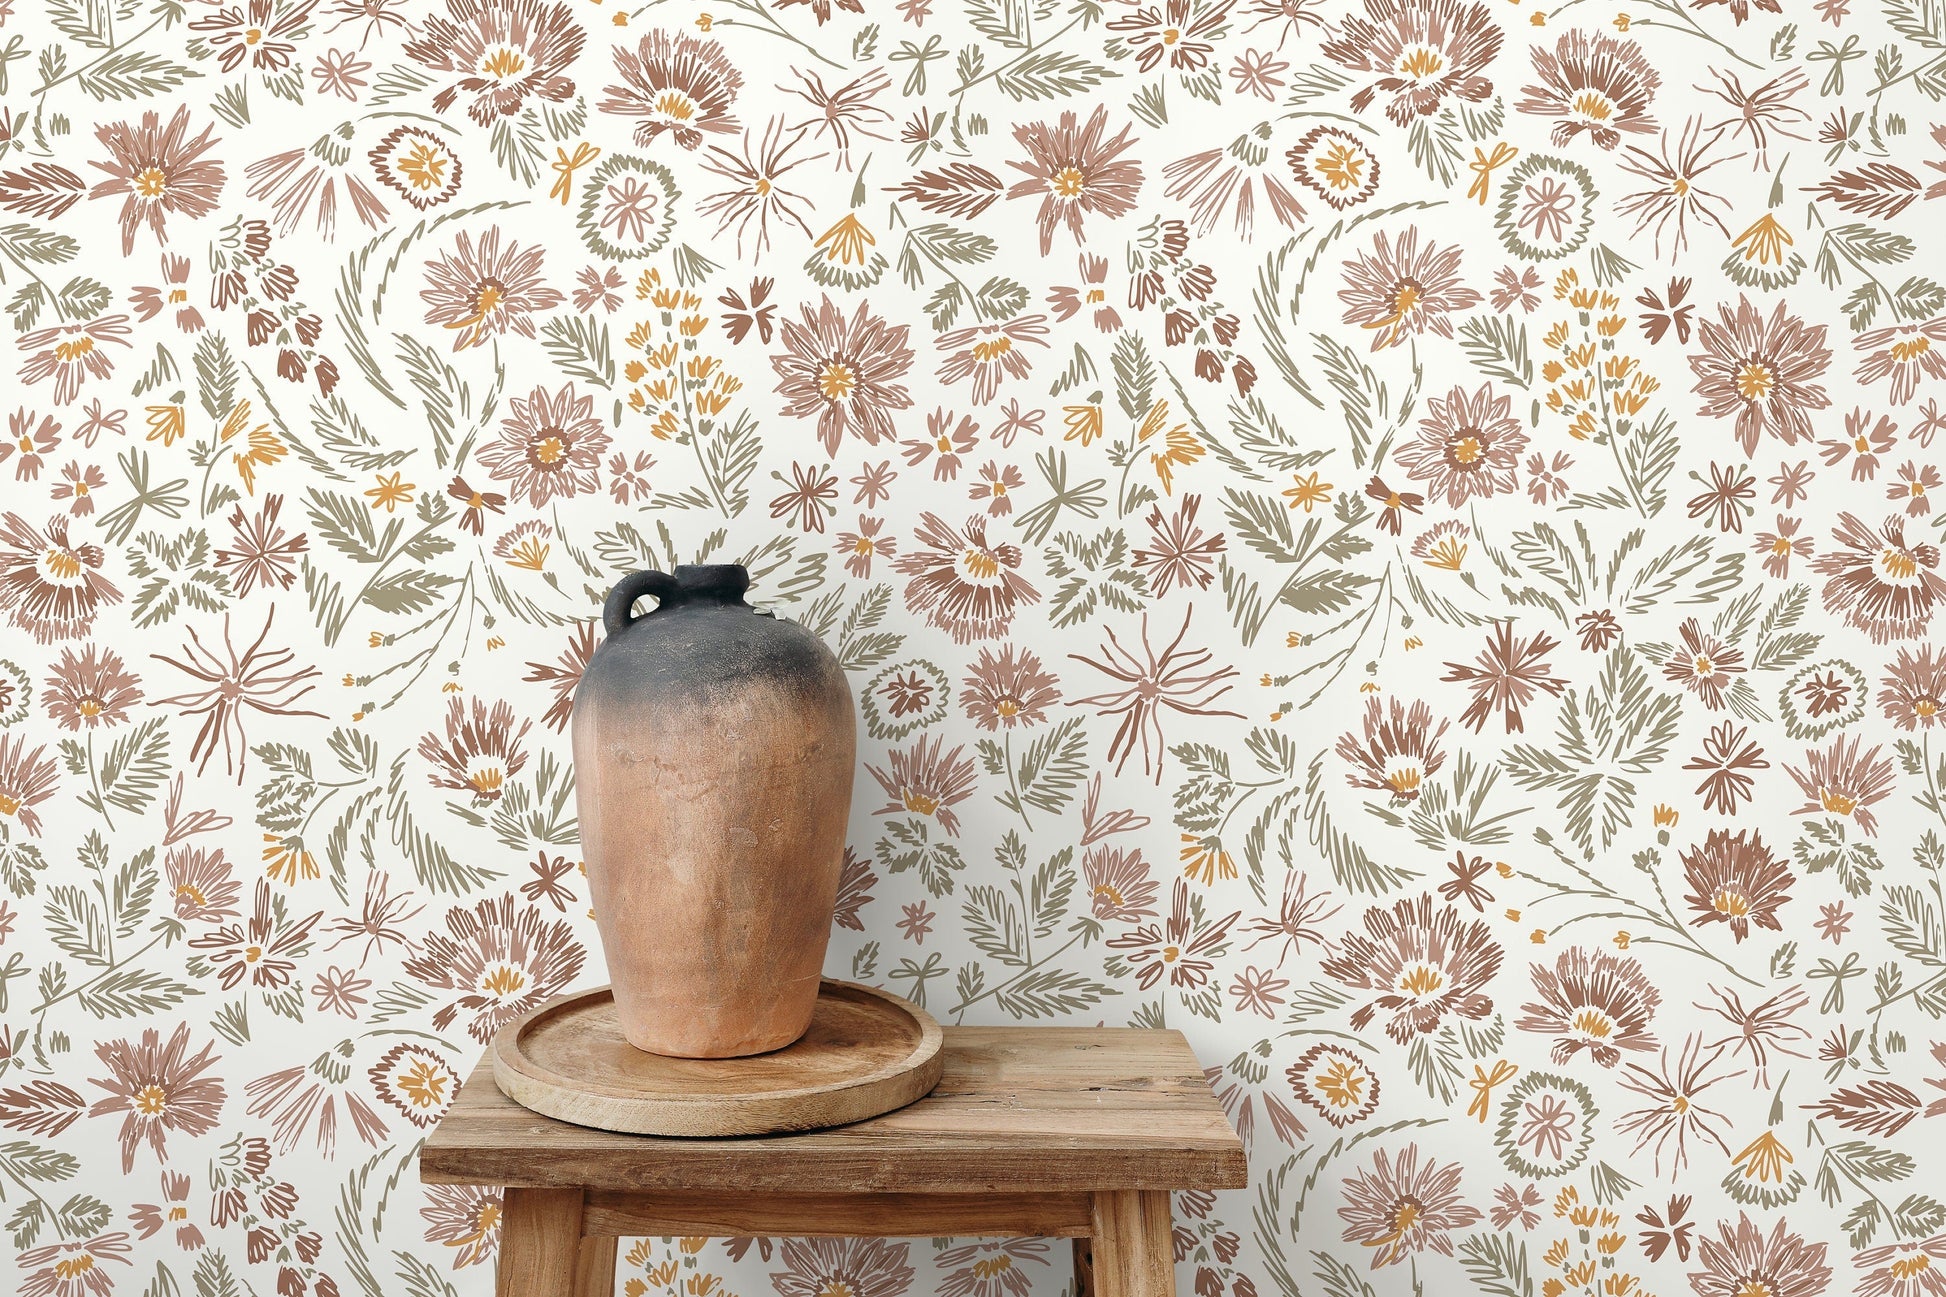 Floral Hand-Drawing Wallpaper / Peel and Stick Wallpaper Removable Wallpaper Home Decor Wall Art Wall Decor Room Decor - D320